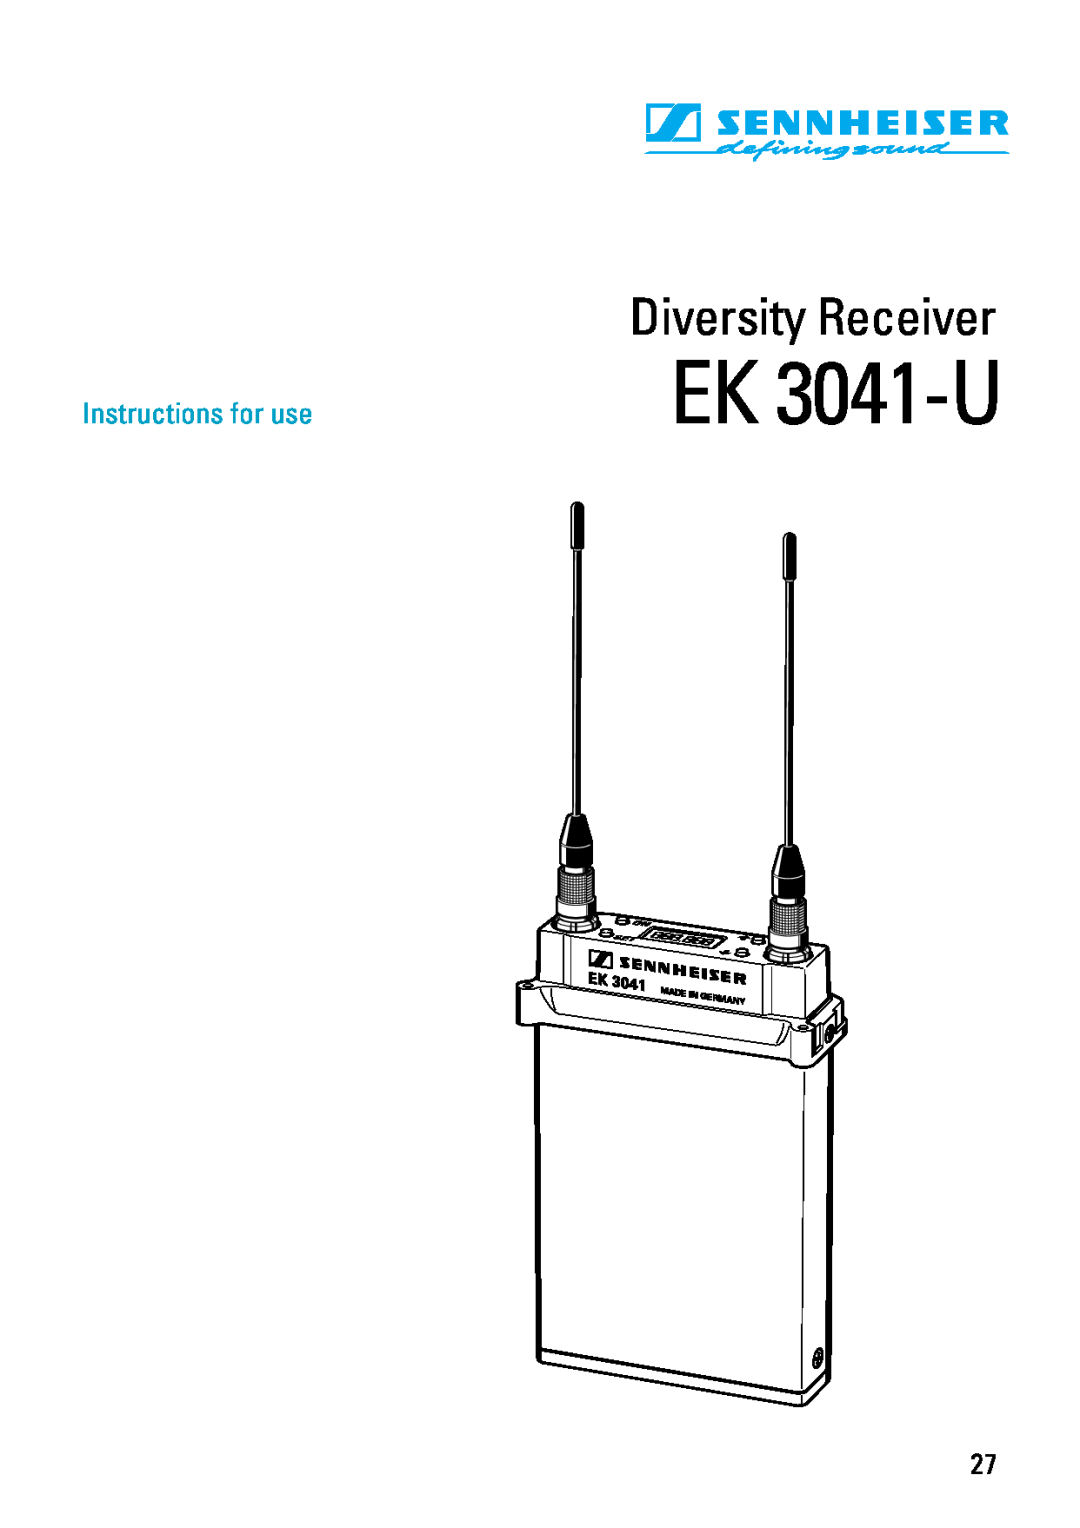 Sennheiser EK 3041-U manual Instructions for use, Diversity Receiver 